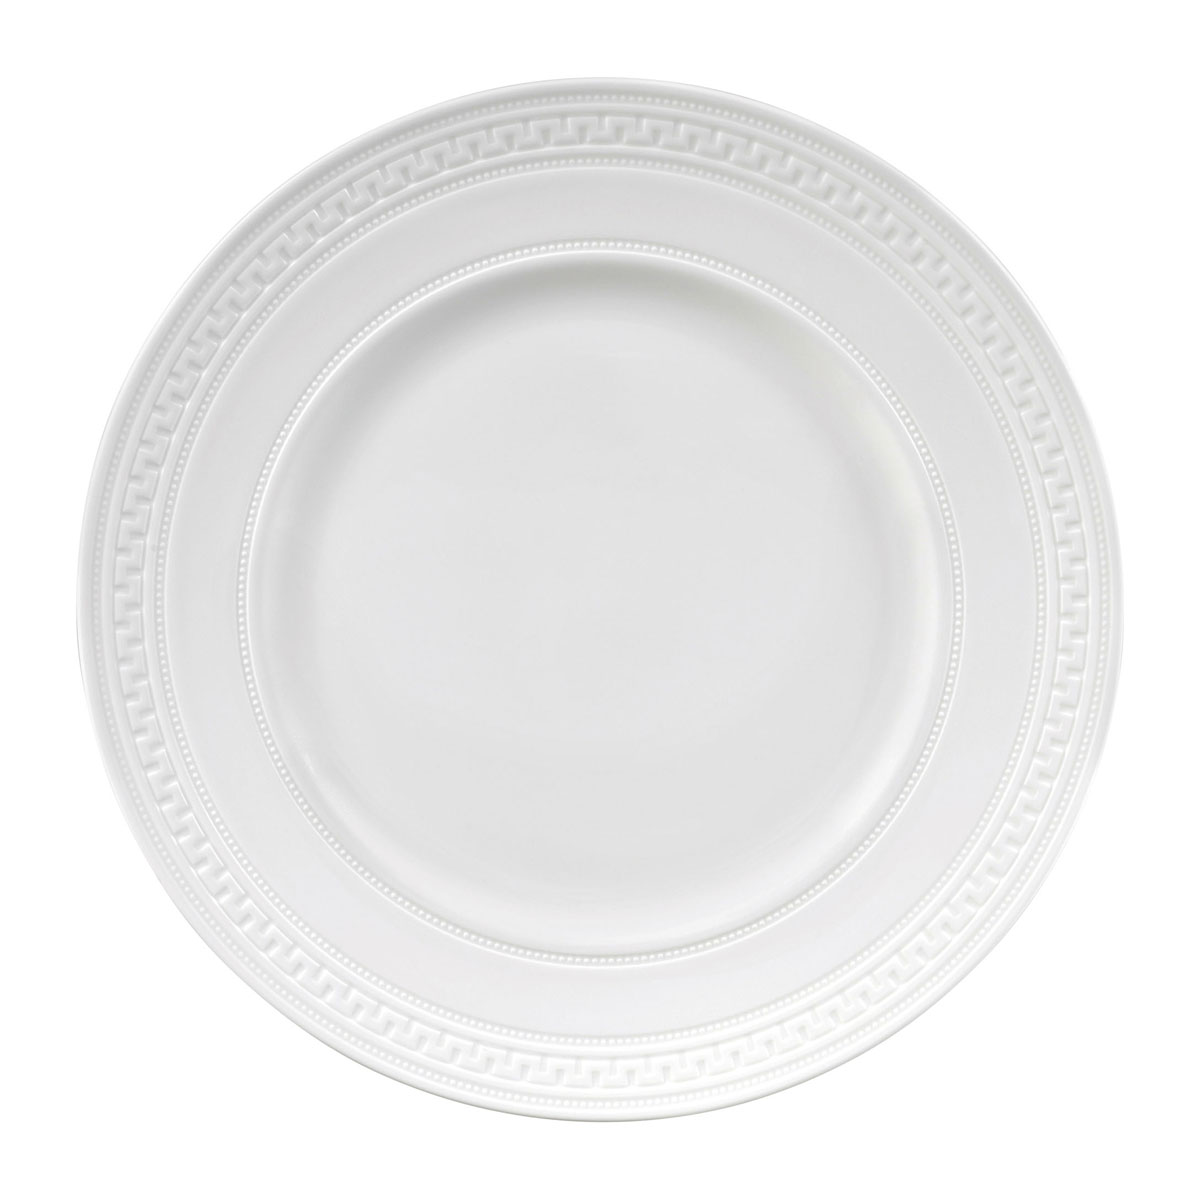 Тарелка обеденная Wedgwood Intaglio 27 см тарелка обеденная wedgwood gio 28 см